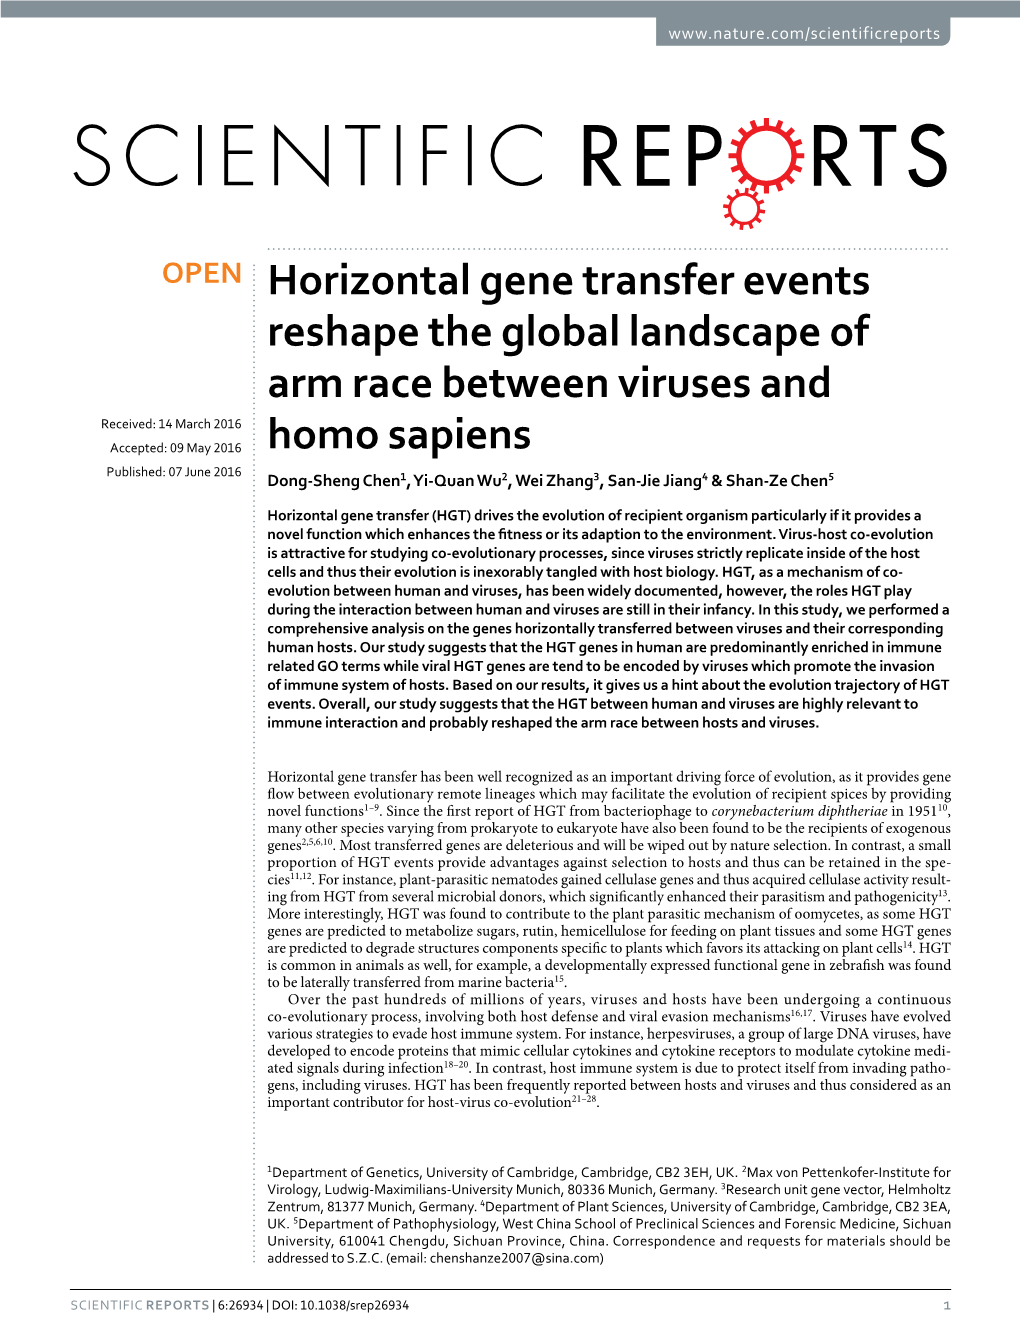 Horizontal Gene Transfer Events Reshape the Global Landscape Of